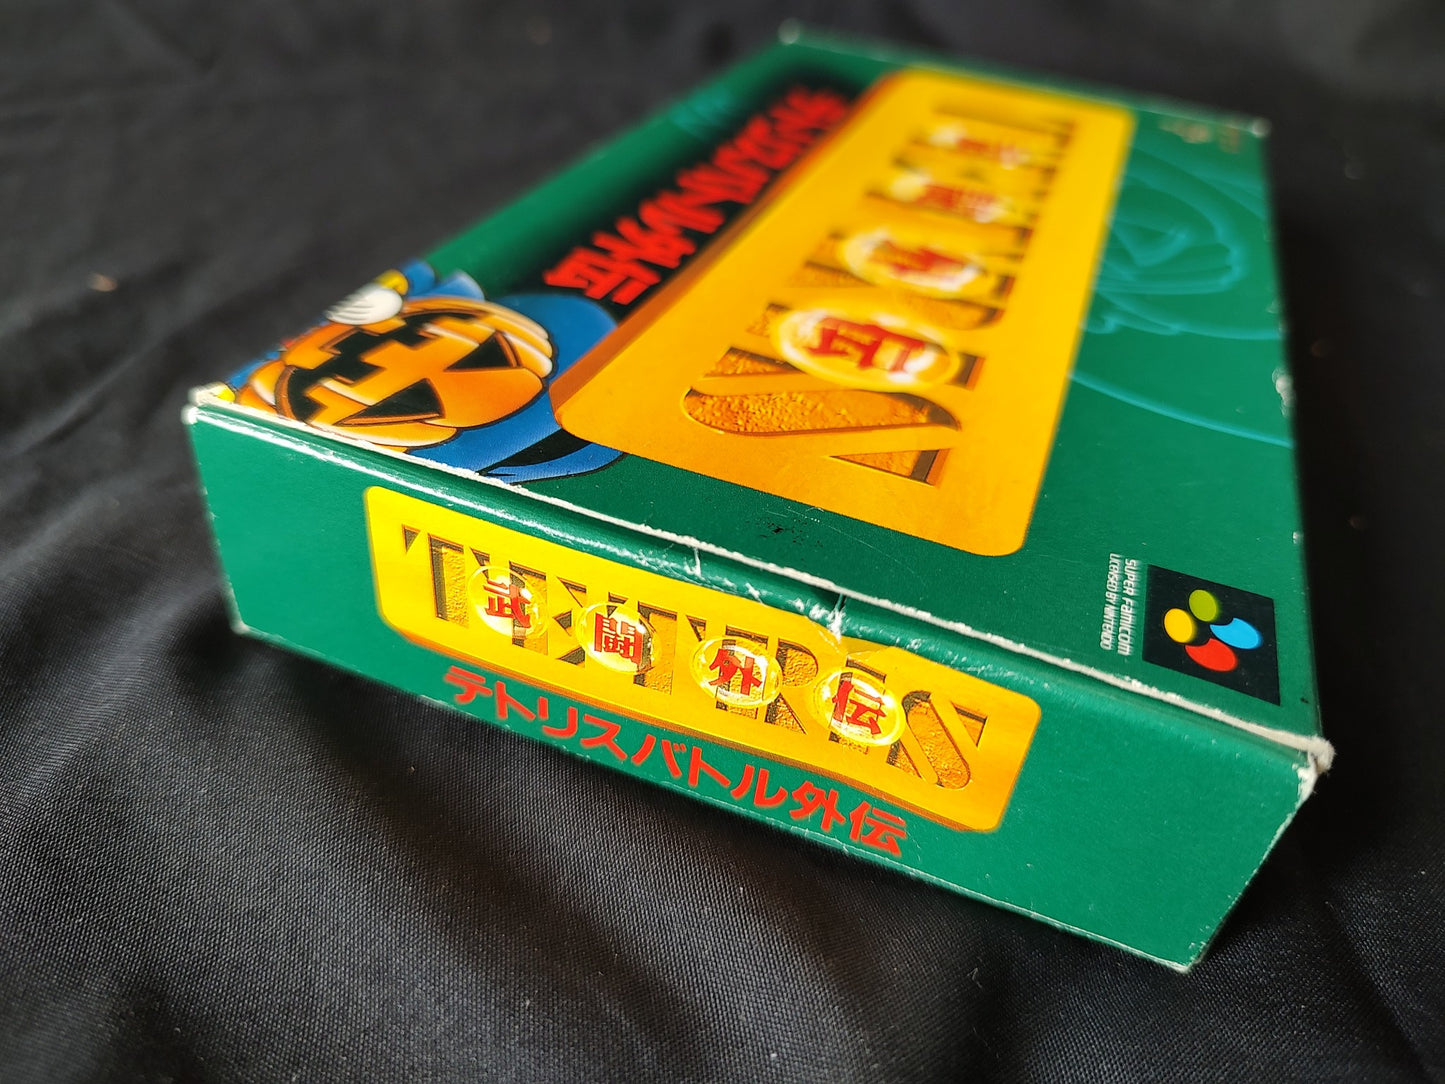 TETRIS BATTLE GAIDEN Nintendo Super Famicom Game Cartridge w/Manual, Box-g0223-